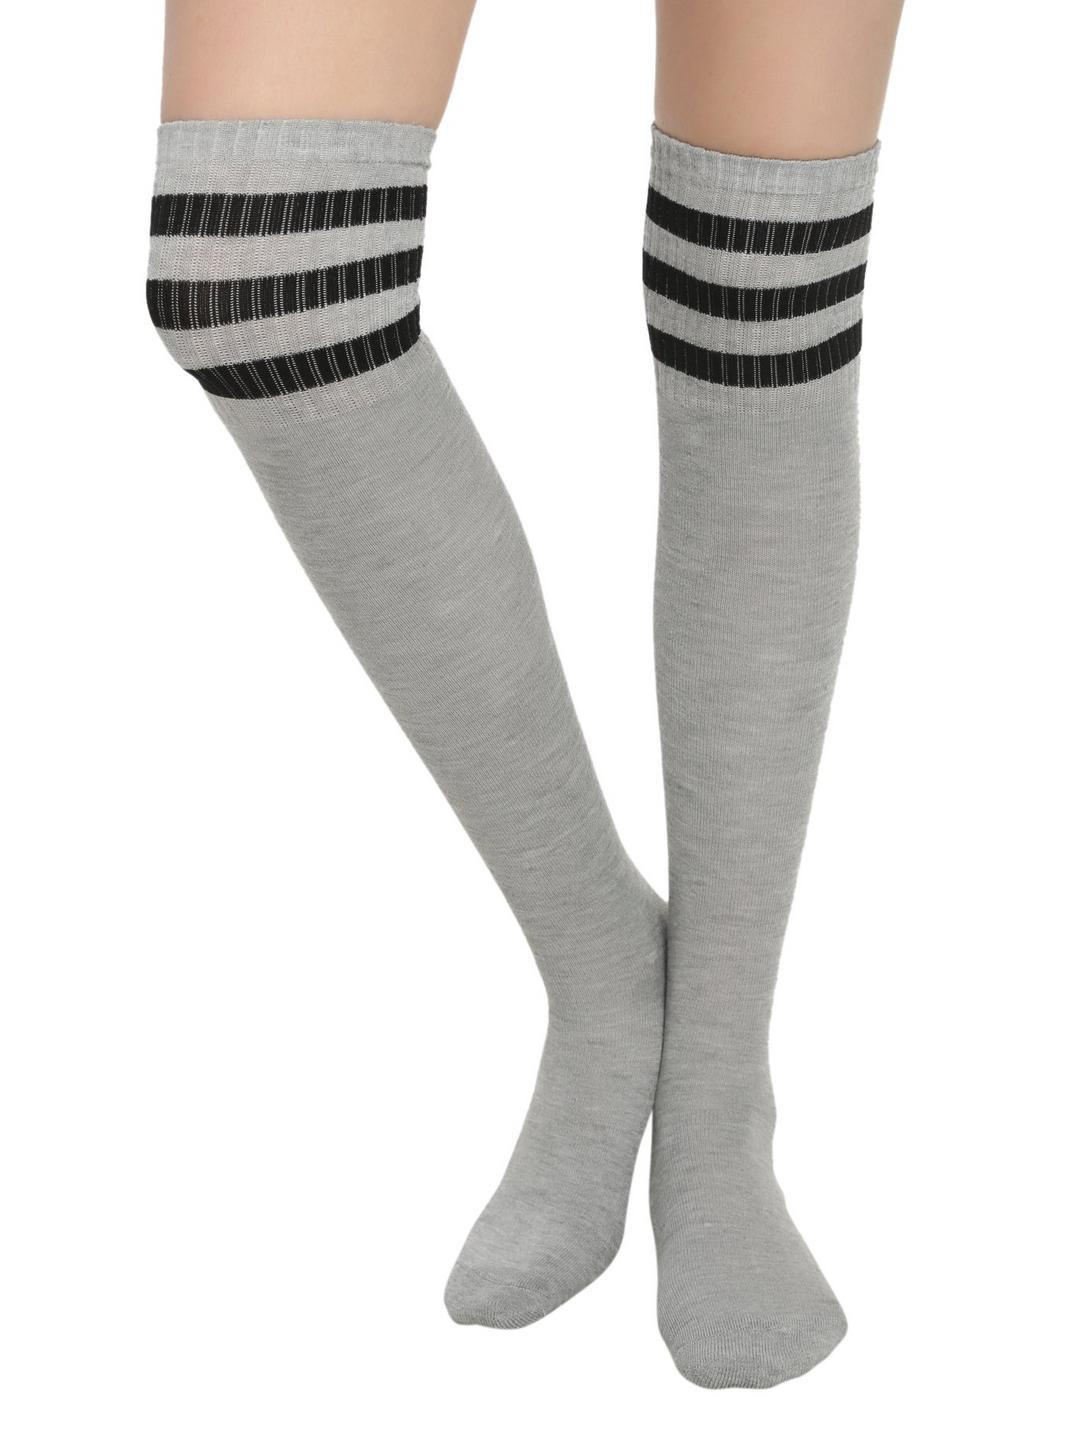 Grey & Black Striped Over-The-Knee Socks, , hi-res